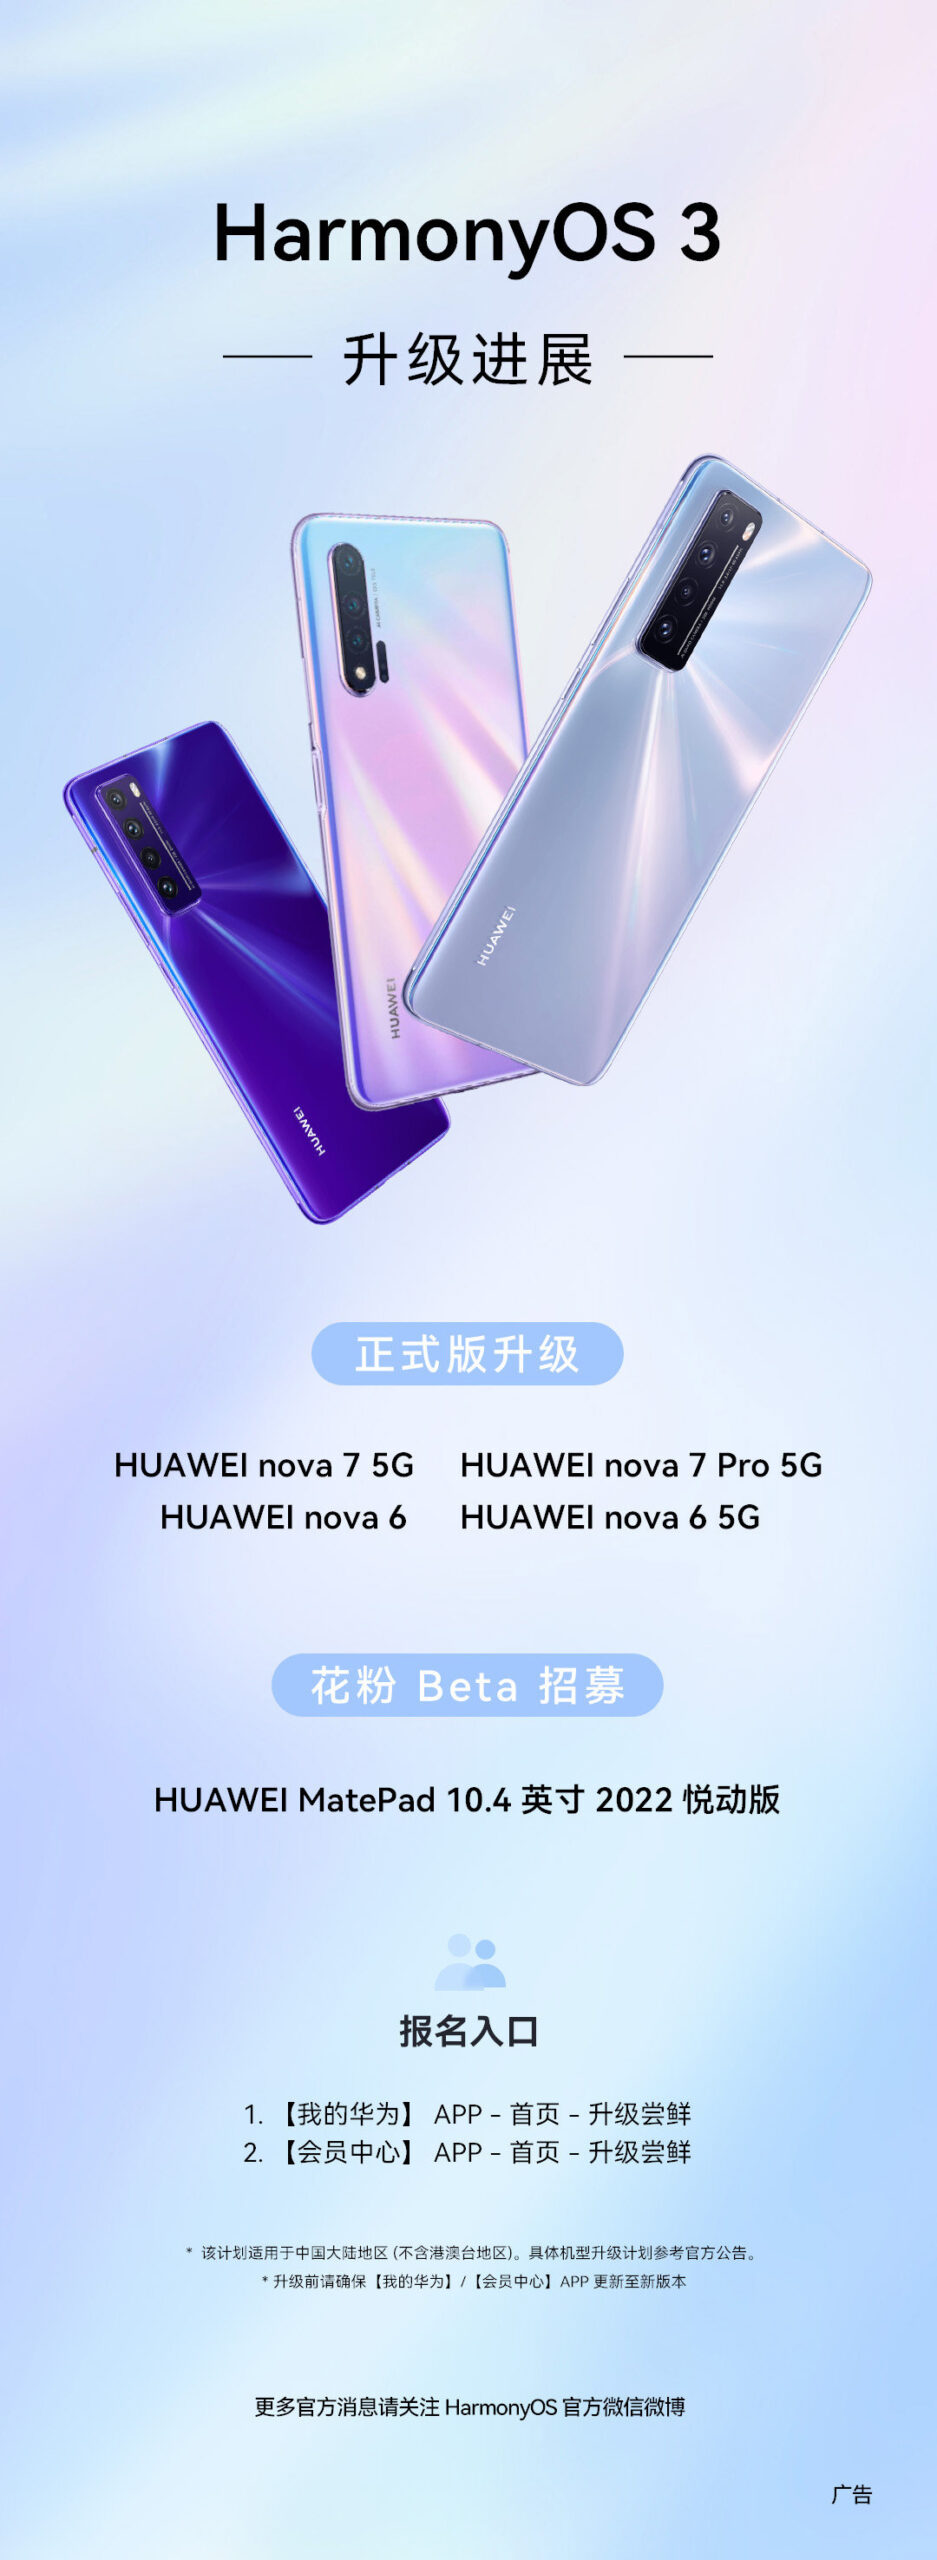 Huawei Nova 7 and Nova 6 getting stable HarmonyOS 3 update